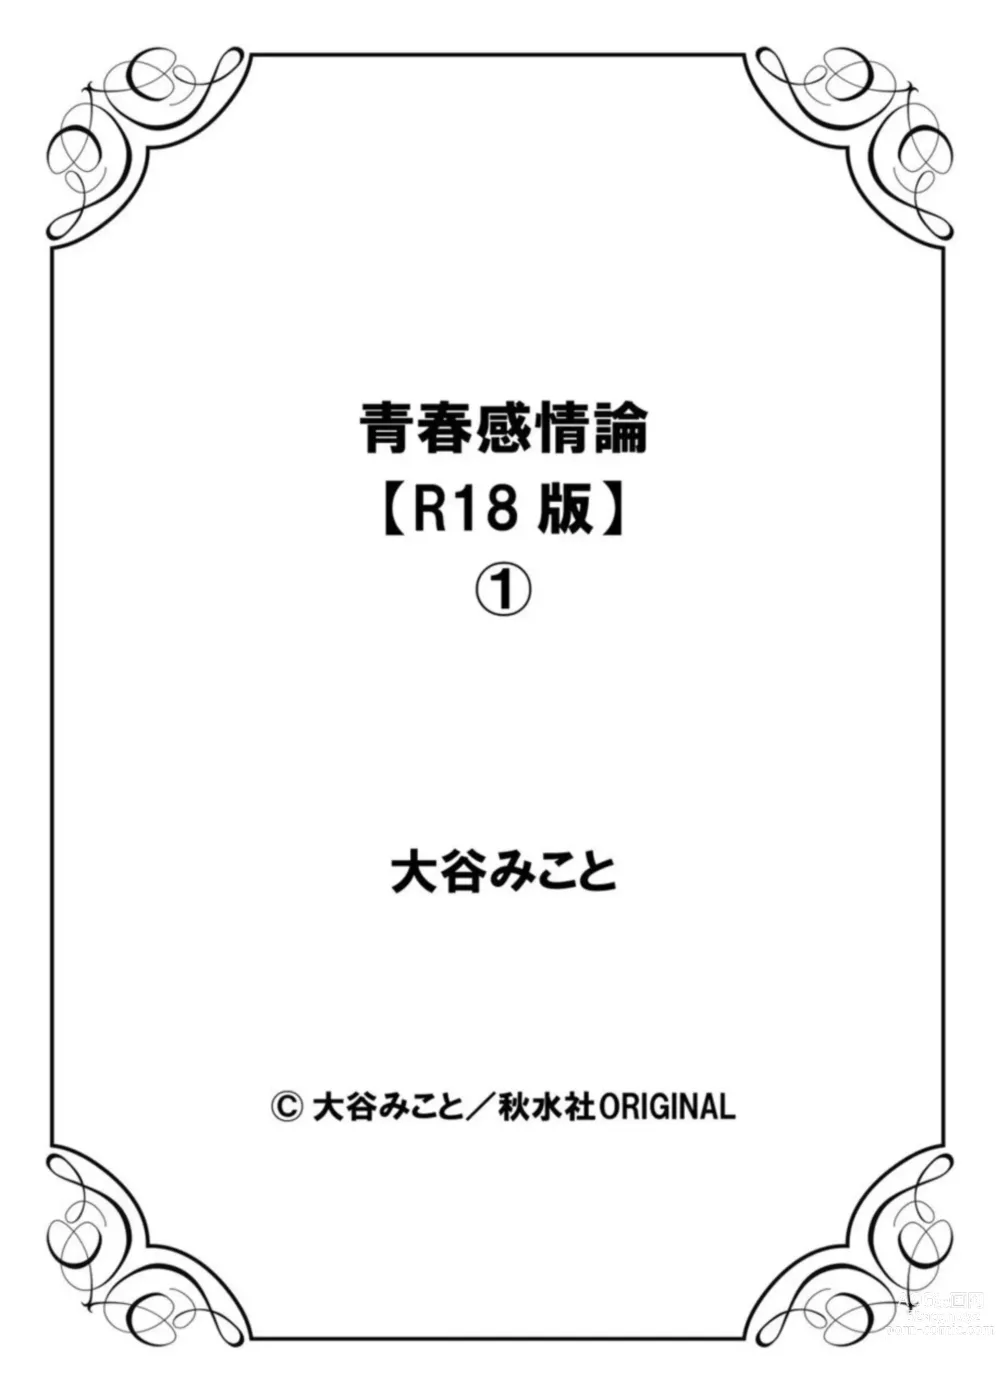 Page 27 of manga Seishun Kanjouron - youth emotion theory [R18 Ban] 1